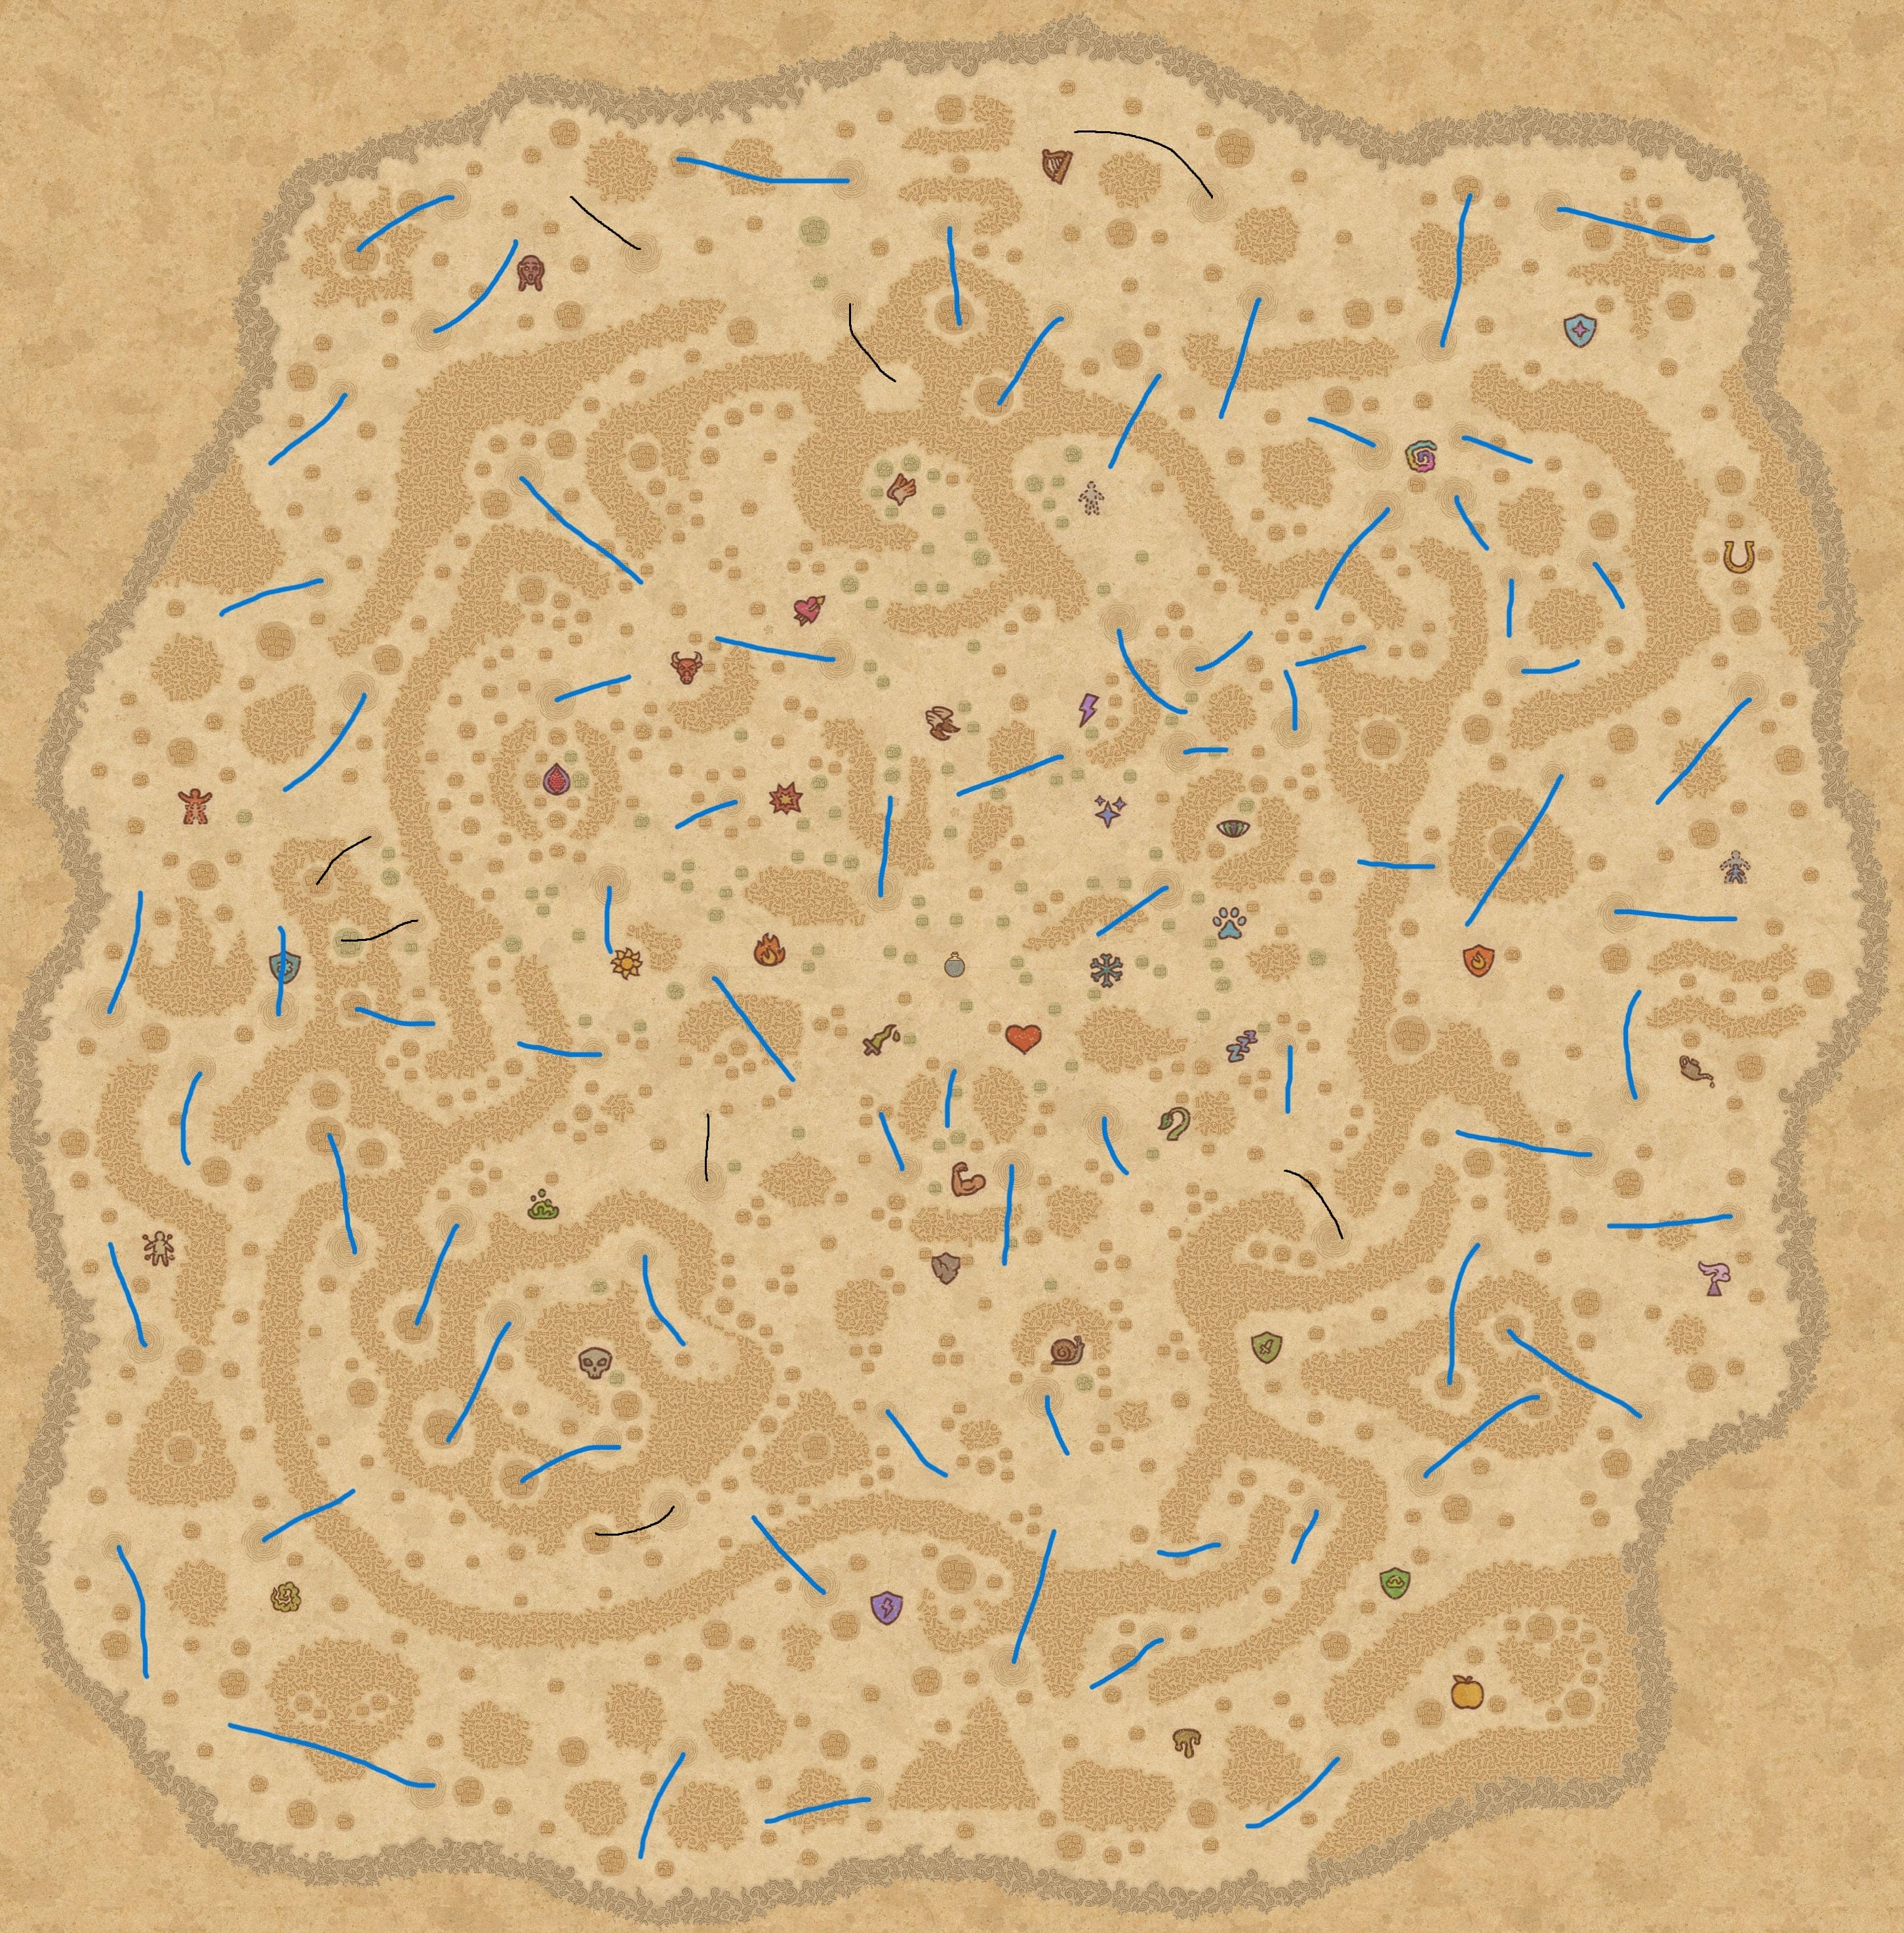 swirl map / mapa de remolinos image 1